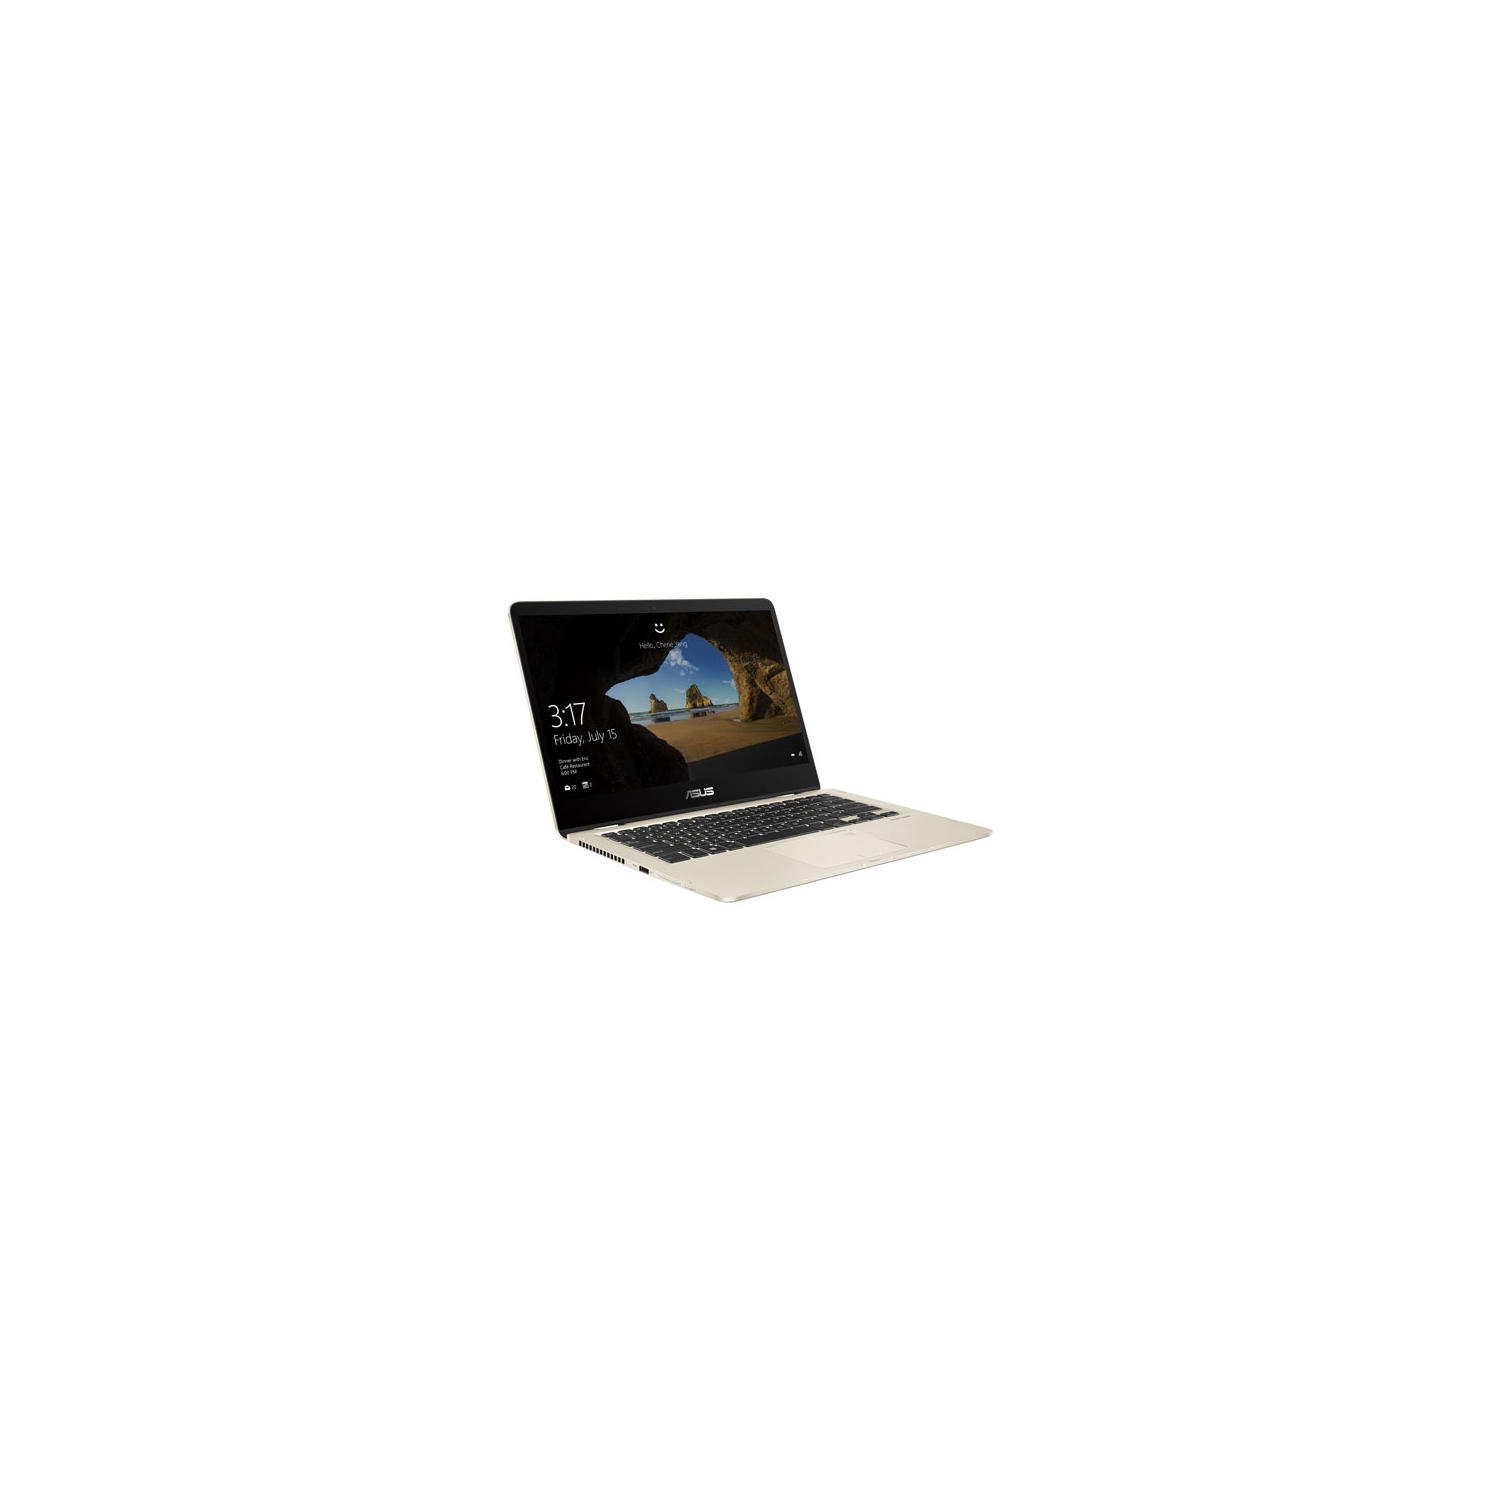 Refurbished (Good) - ASUS ZenBook Flip 14" Touchscreen 2-in-1 Laptop - Gold (Intel Core i5-8250U/256GB SSD/8GB RAM/Windows 10)